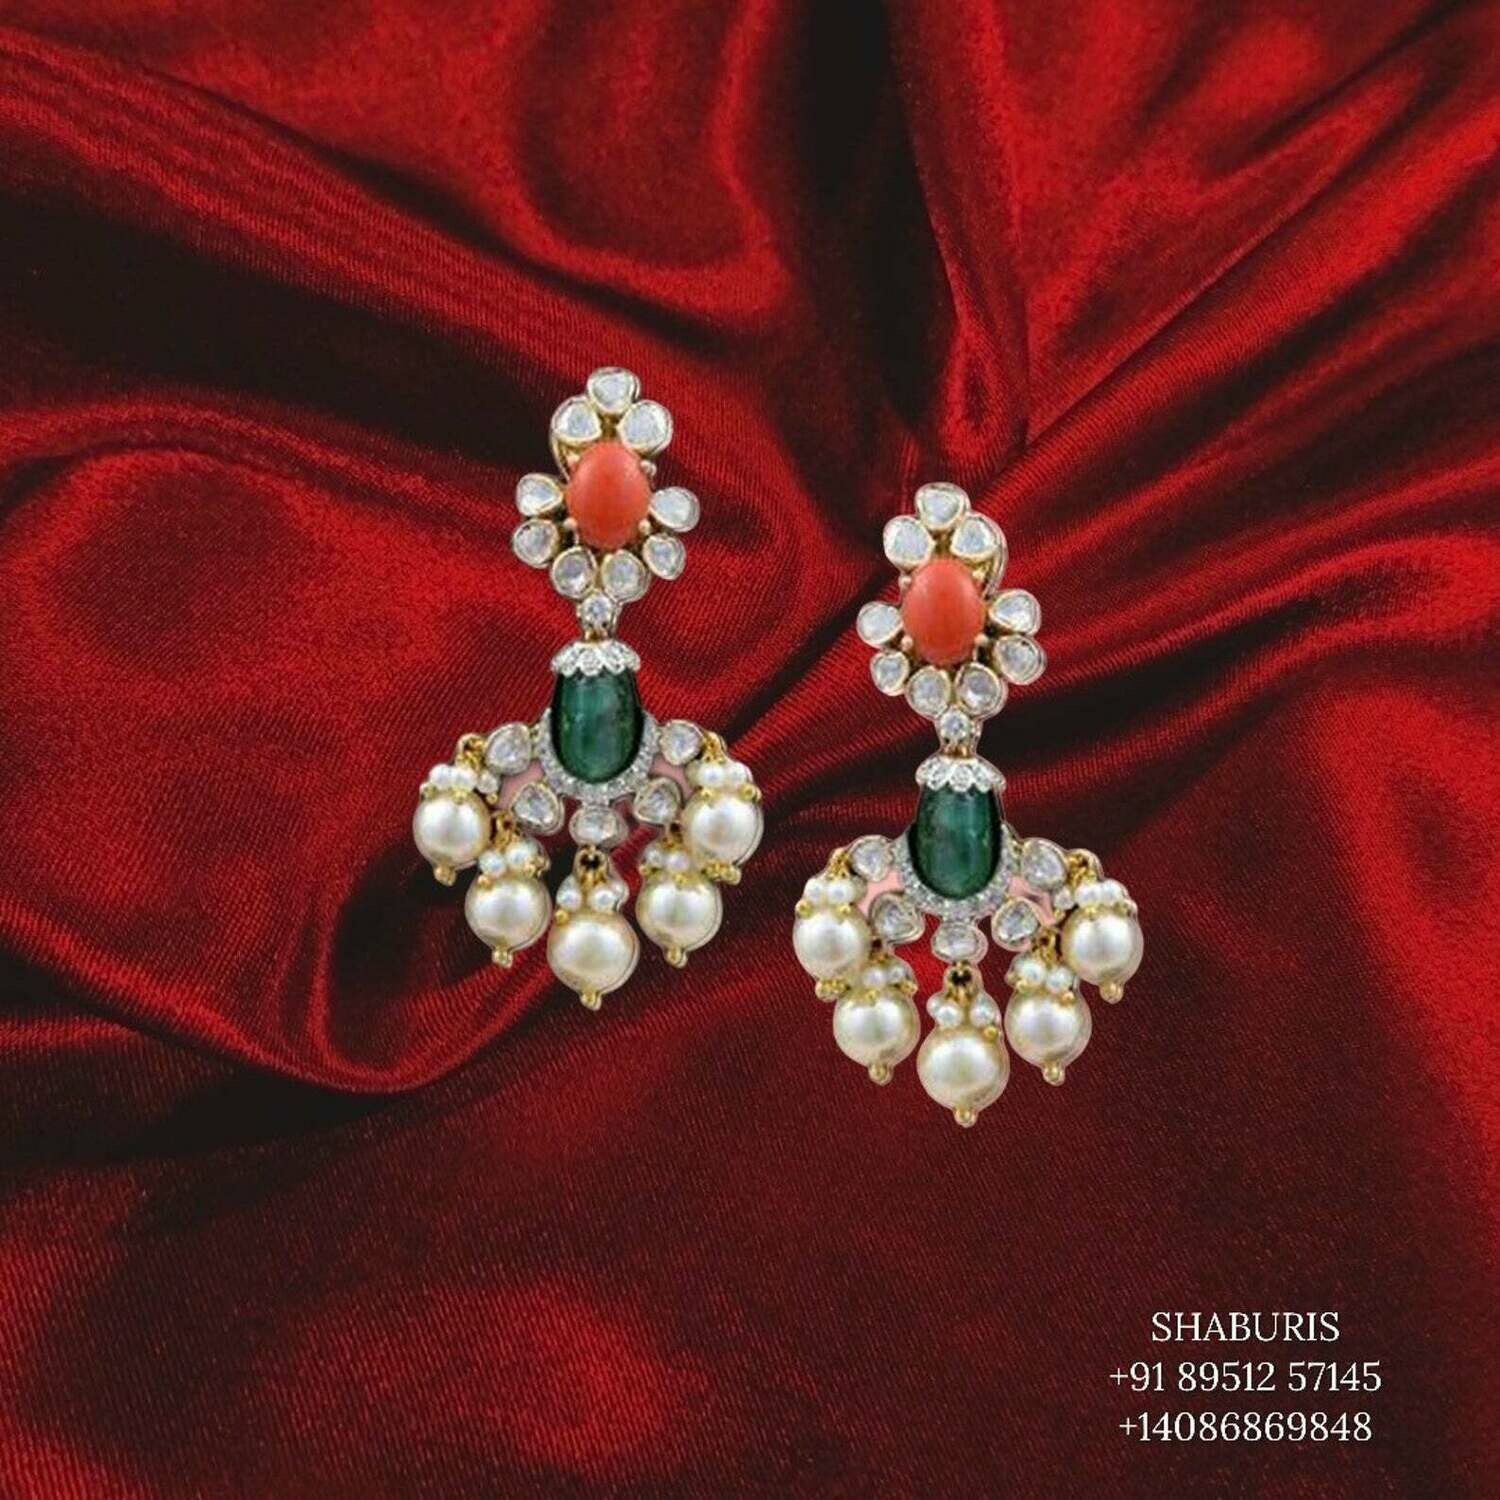 Diamond Jhumka,diamond earrings,diamond jewelry indian,polki diamond jhumka,swarovski diamond jhumka,silver earrings-SHABURIS